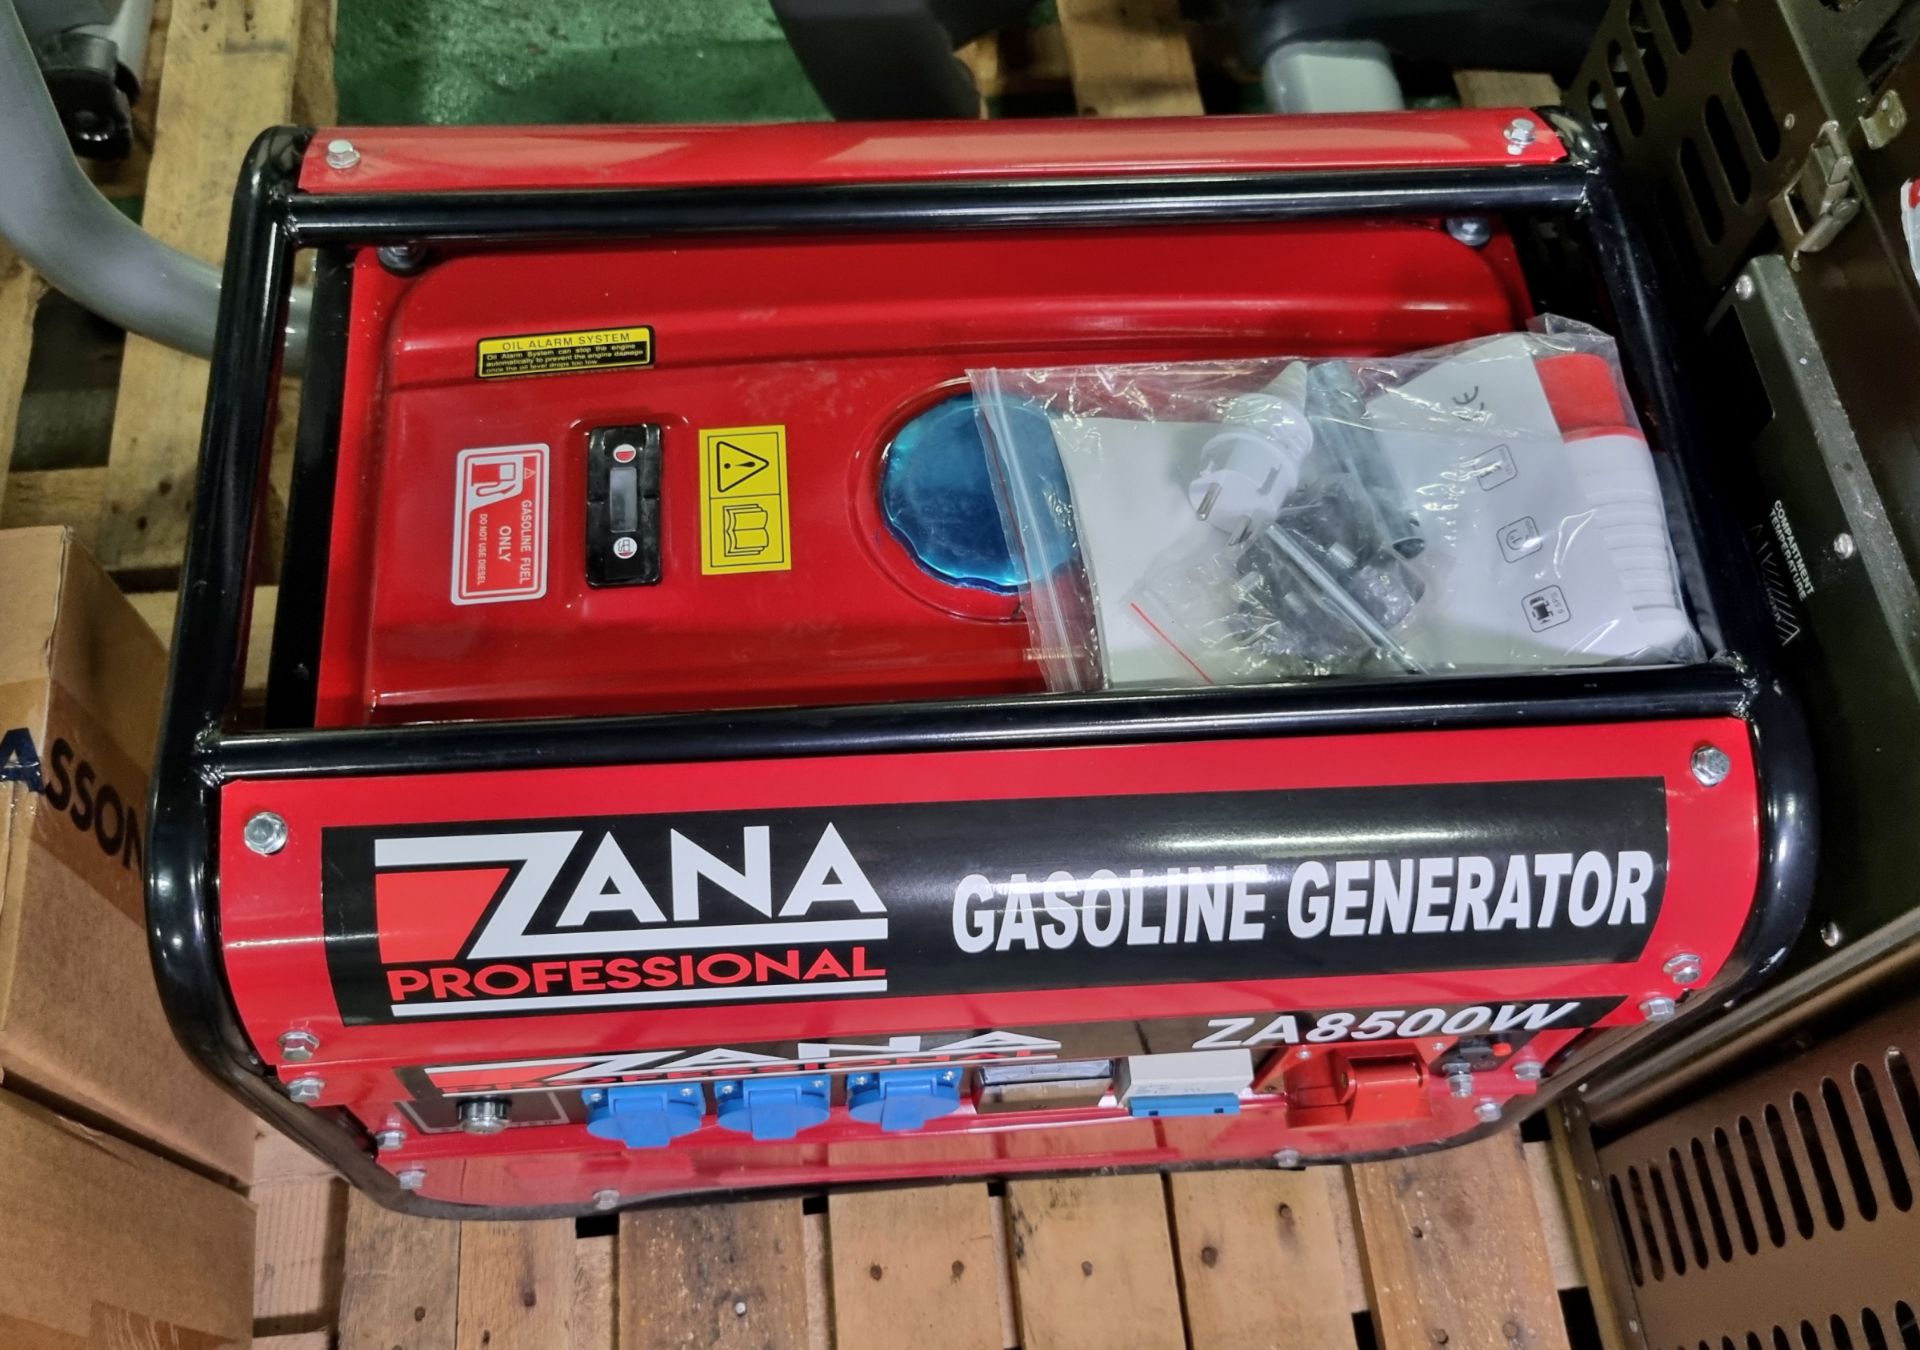 ZANA professional ZA8500W gasoline generator - Bild 2 aus 12